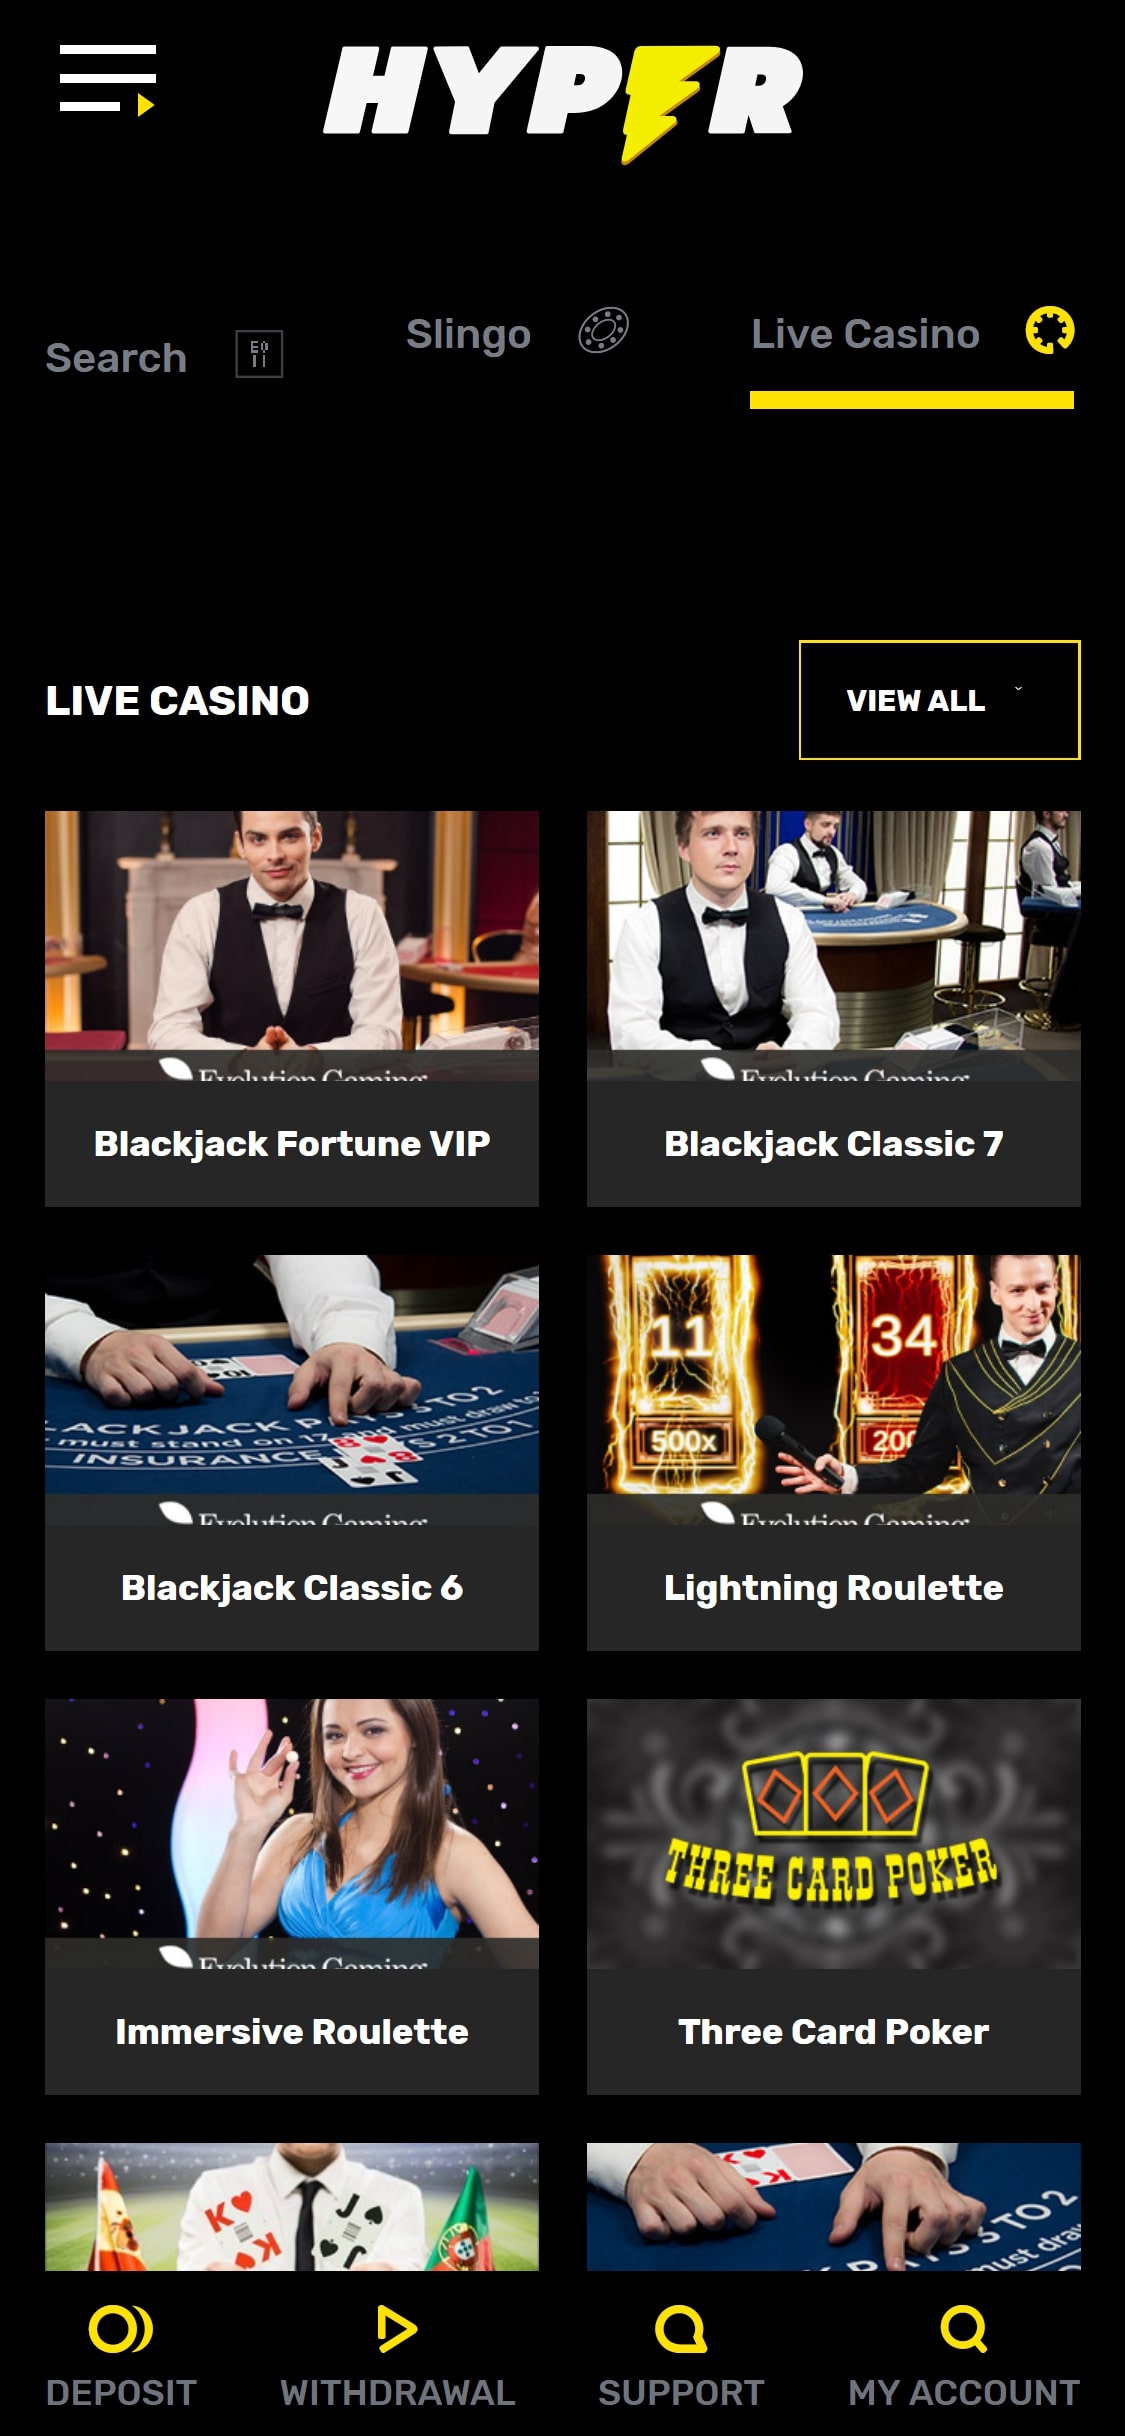 Hyper Casino Mobile Live Dealer Games Review